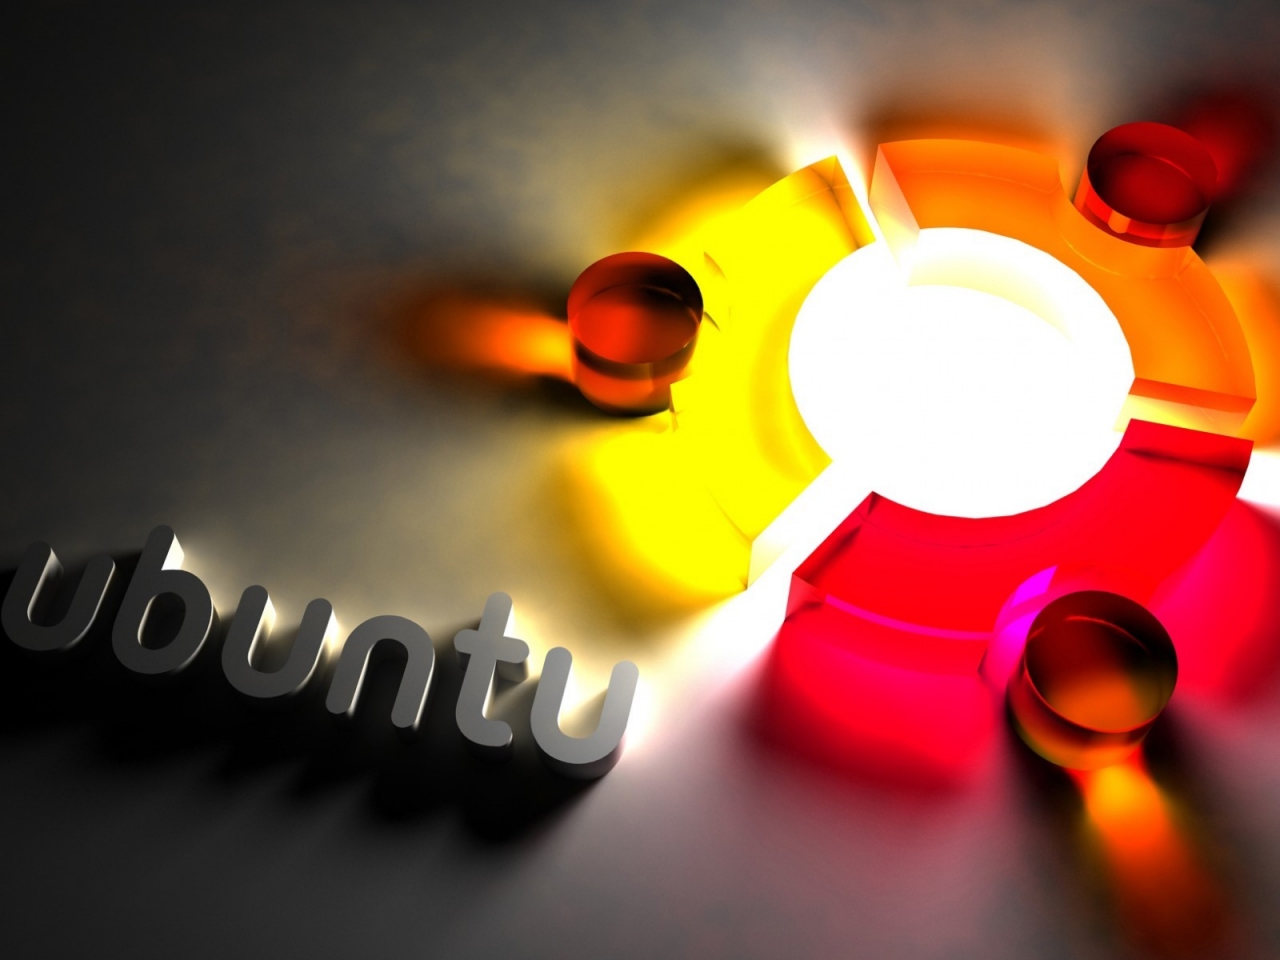 Ubuntu Cool Logo for 1280 x 960 resolution